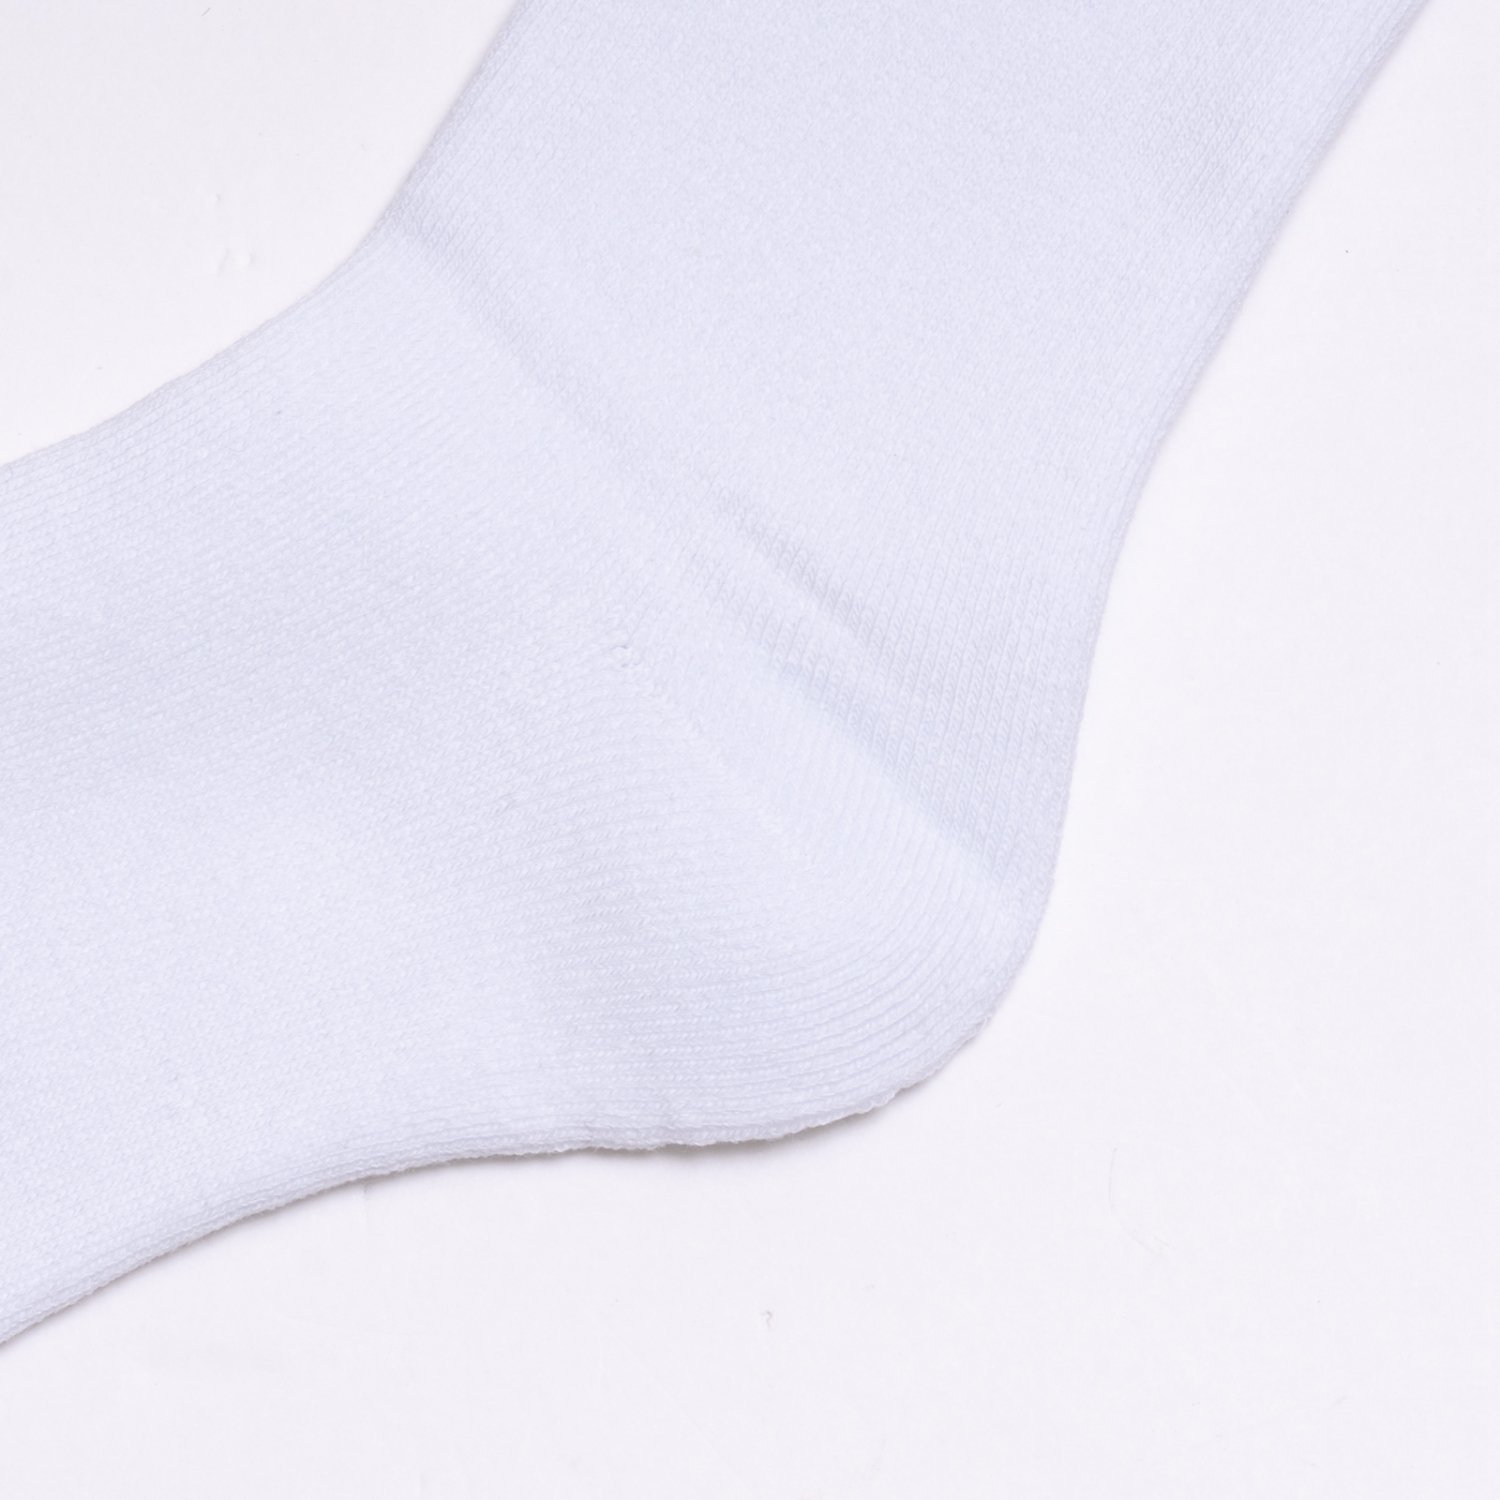 Graphpaper * 3-Pack Socks(4色展開)